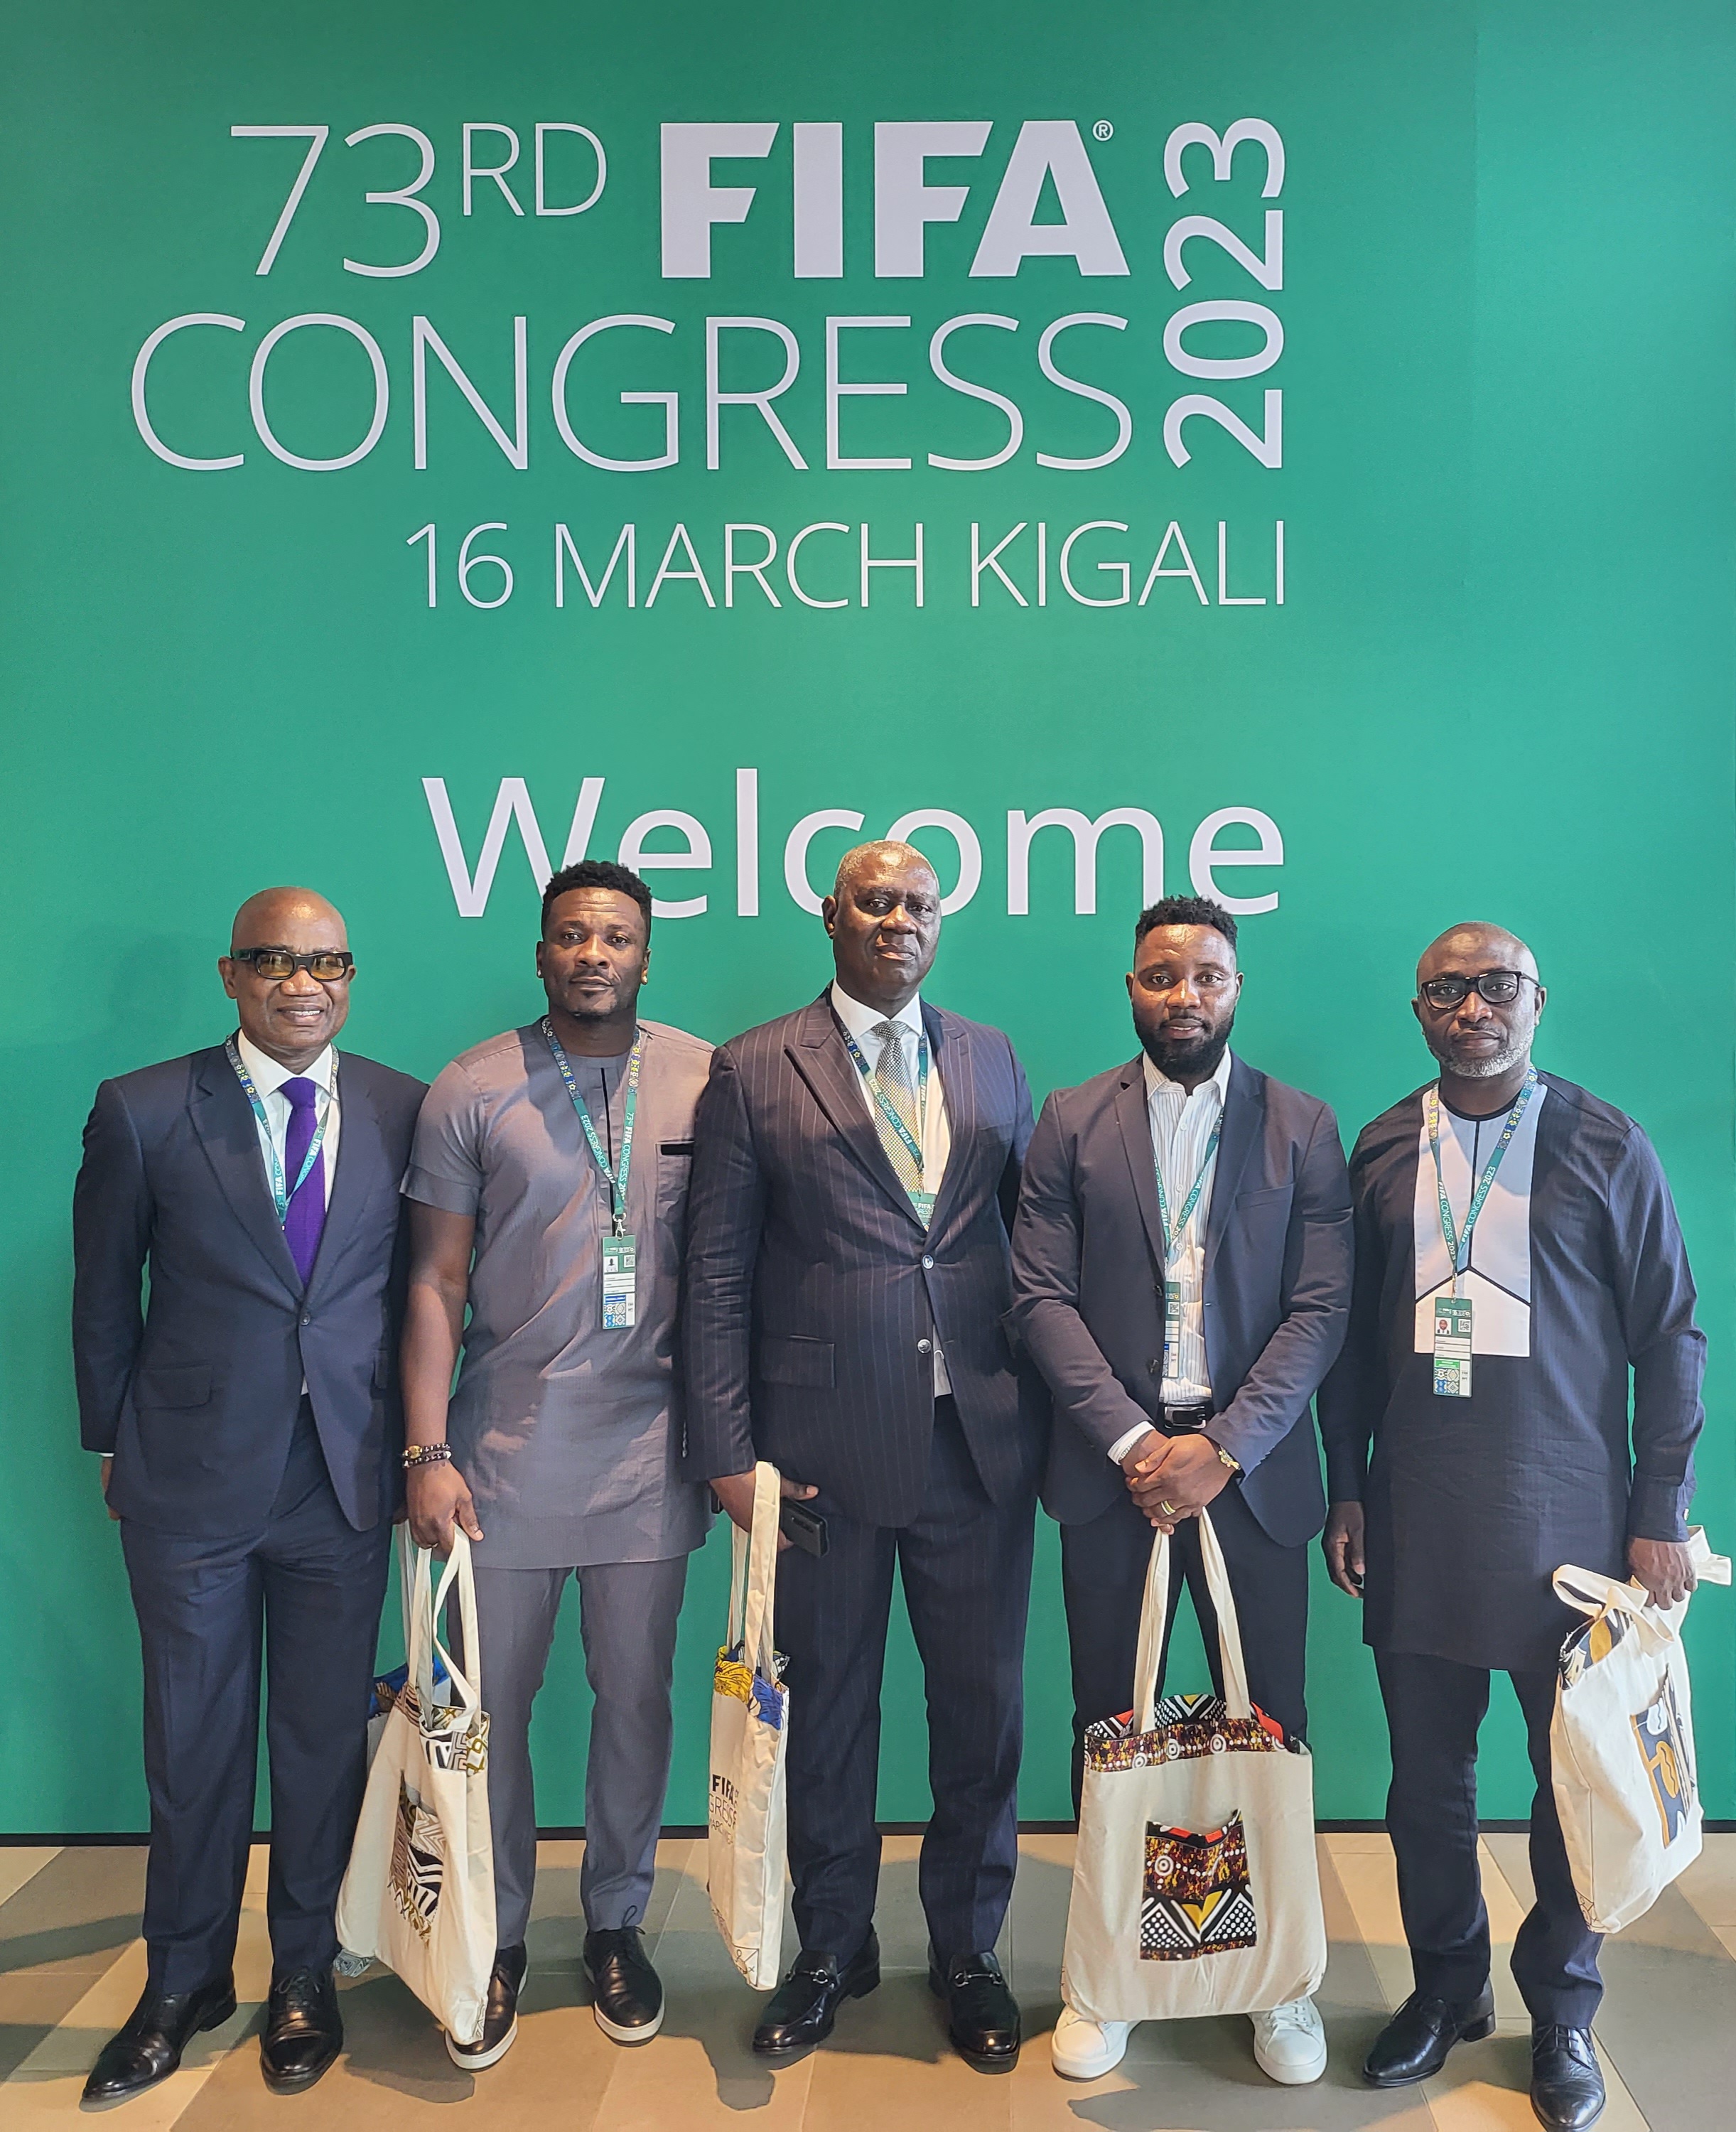 Vice President Mark Addo, General Secretary Prosper Harrison Addo attend FIFA Congress in Kigali